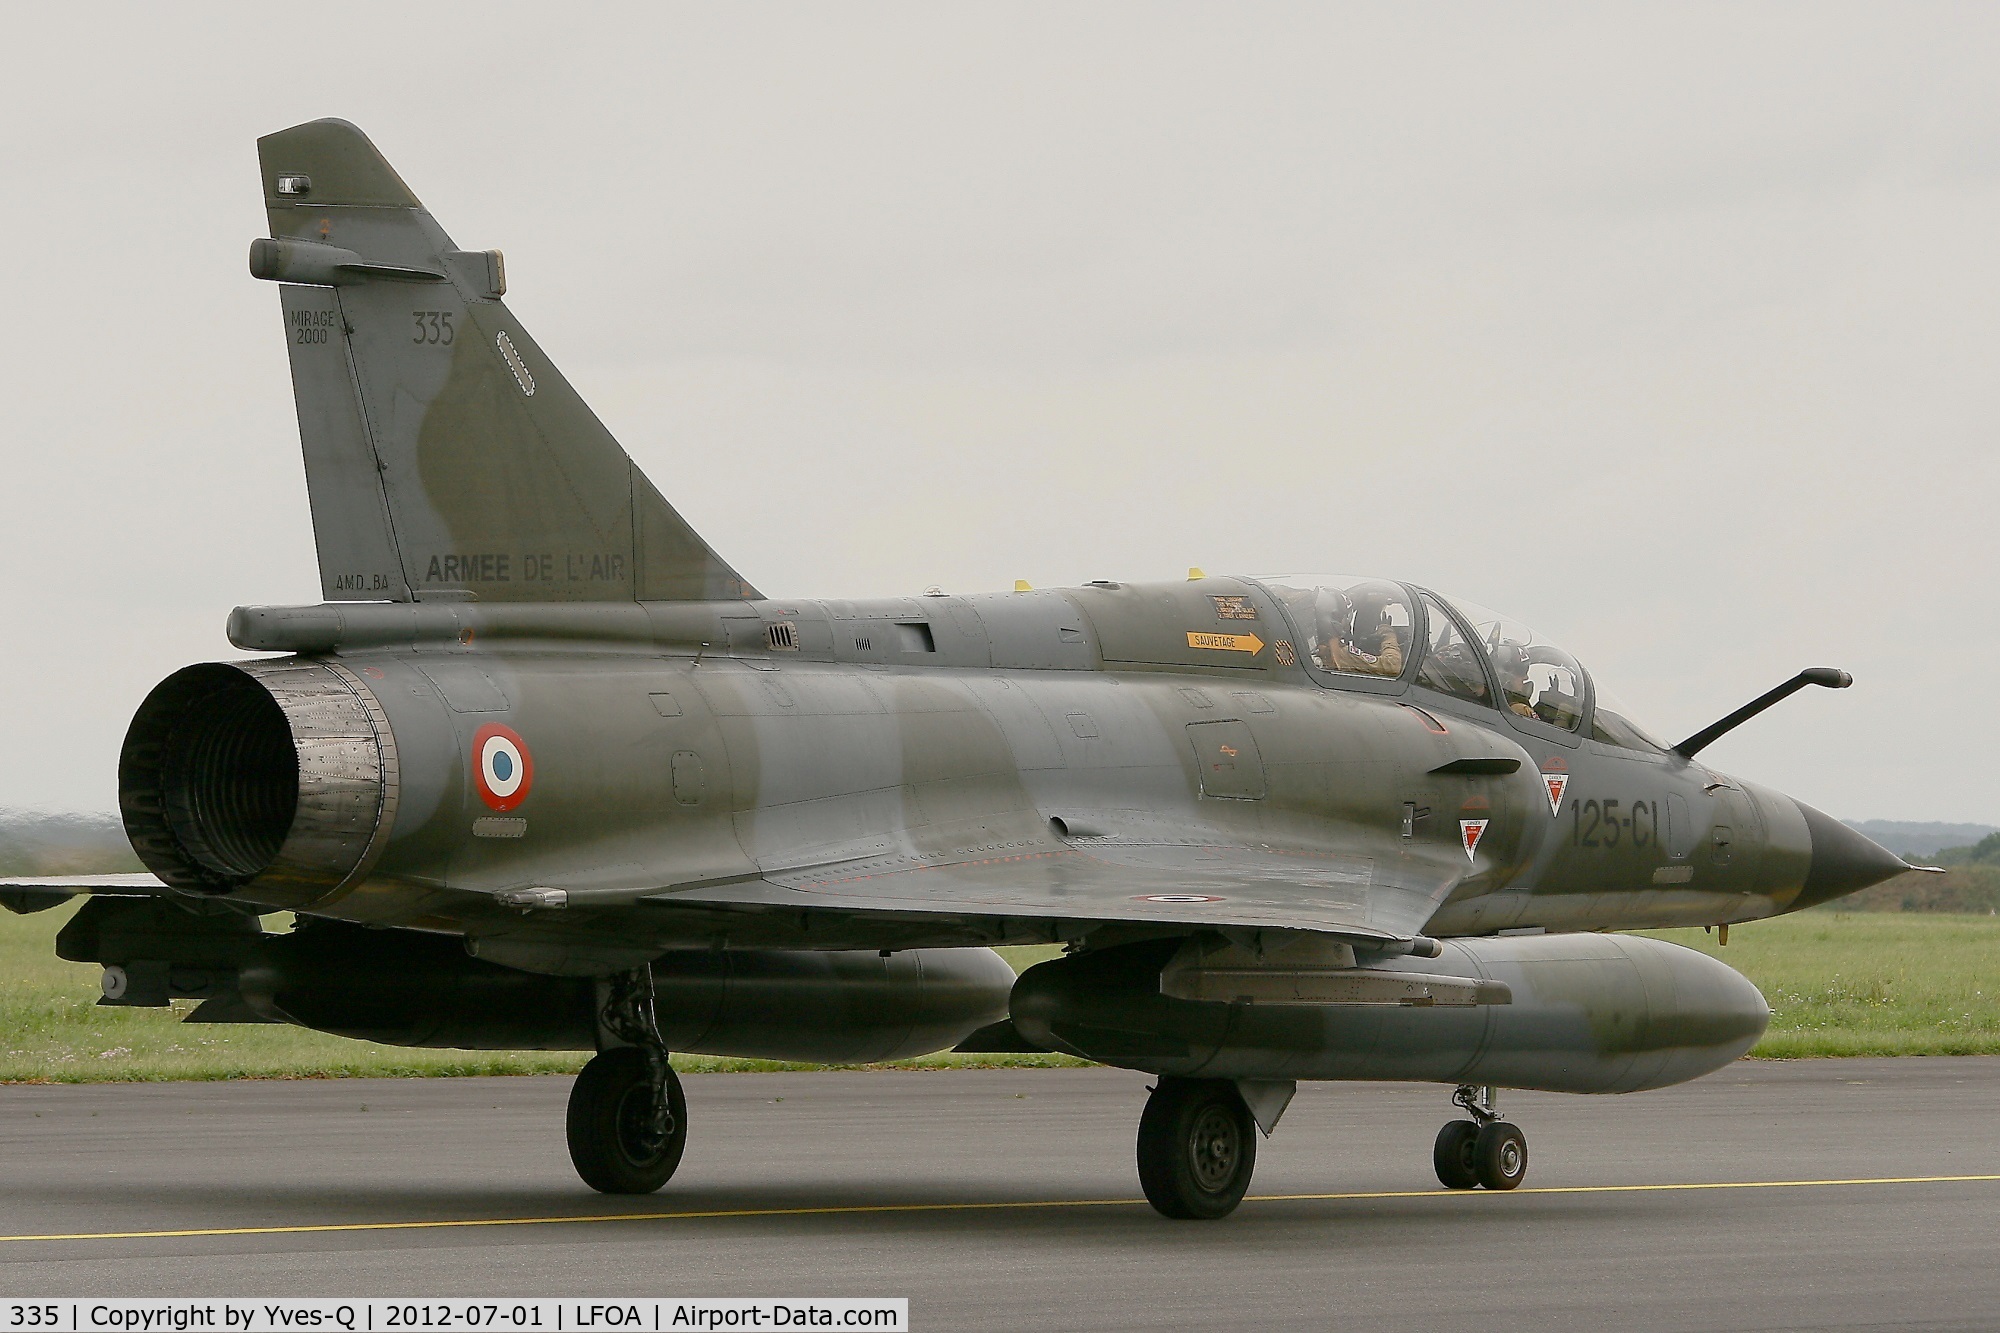 335, Dassault Mirage 2000N C/N 261, French Air Force Dassault Mirage 2000N (125-CI), Avord Air Base 702 (LFOA)